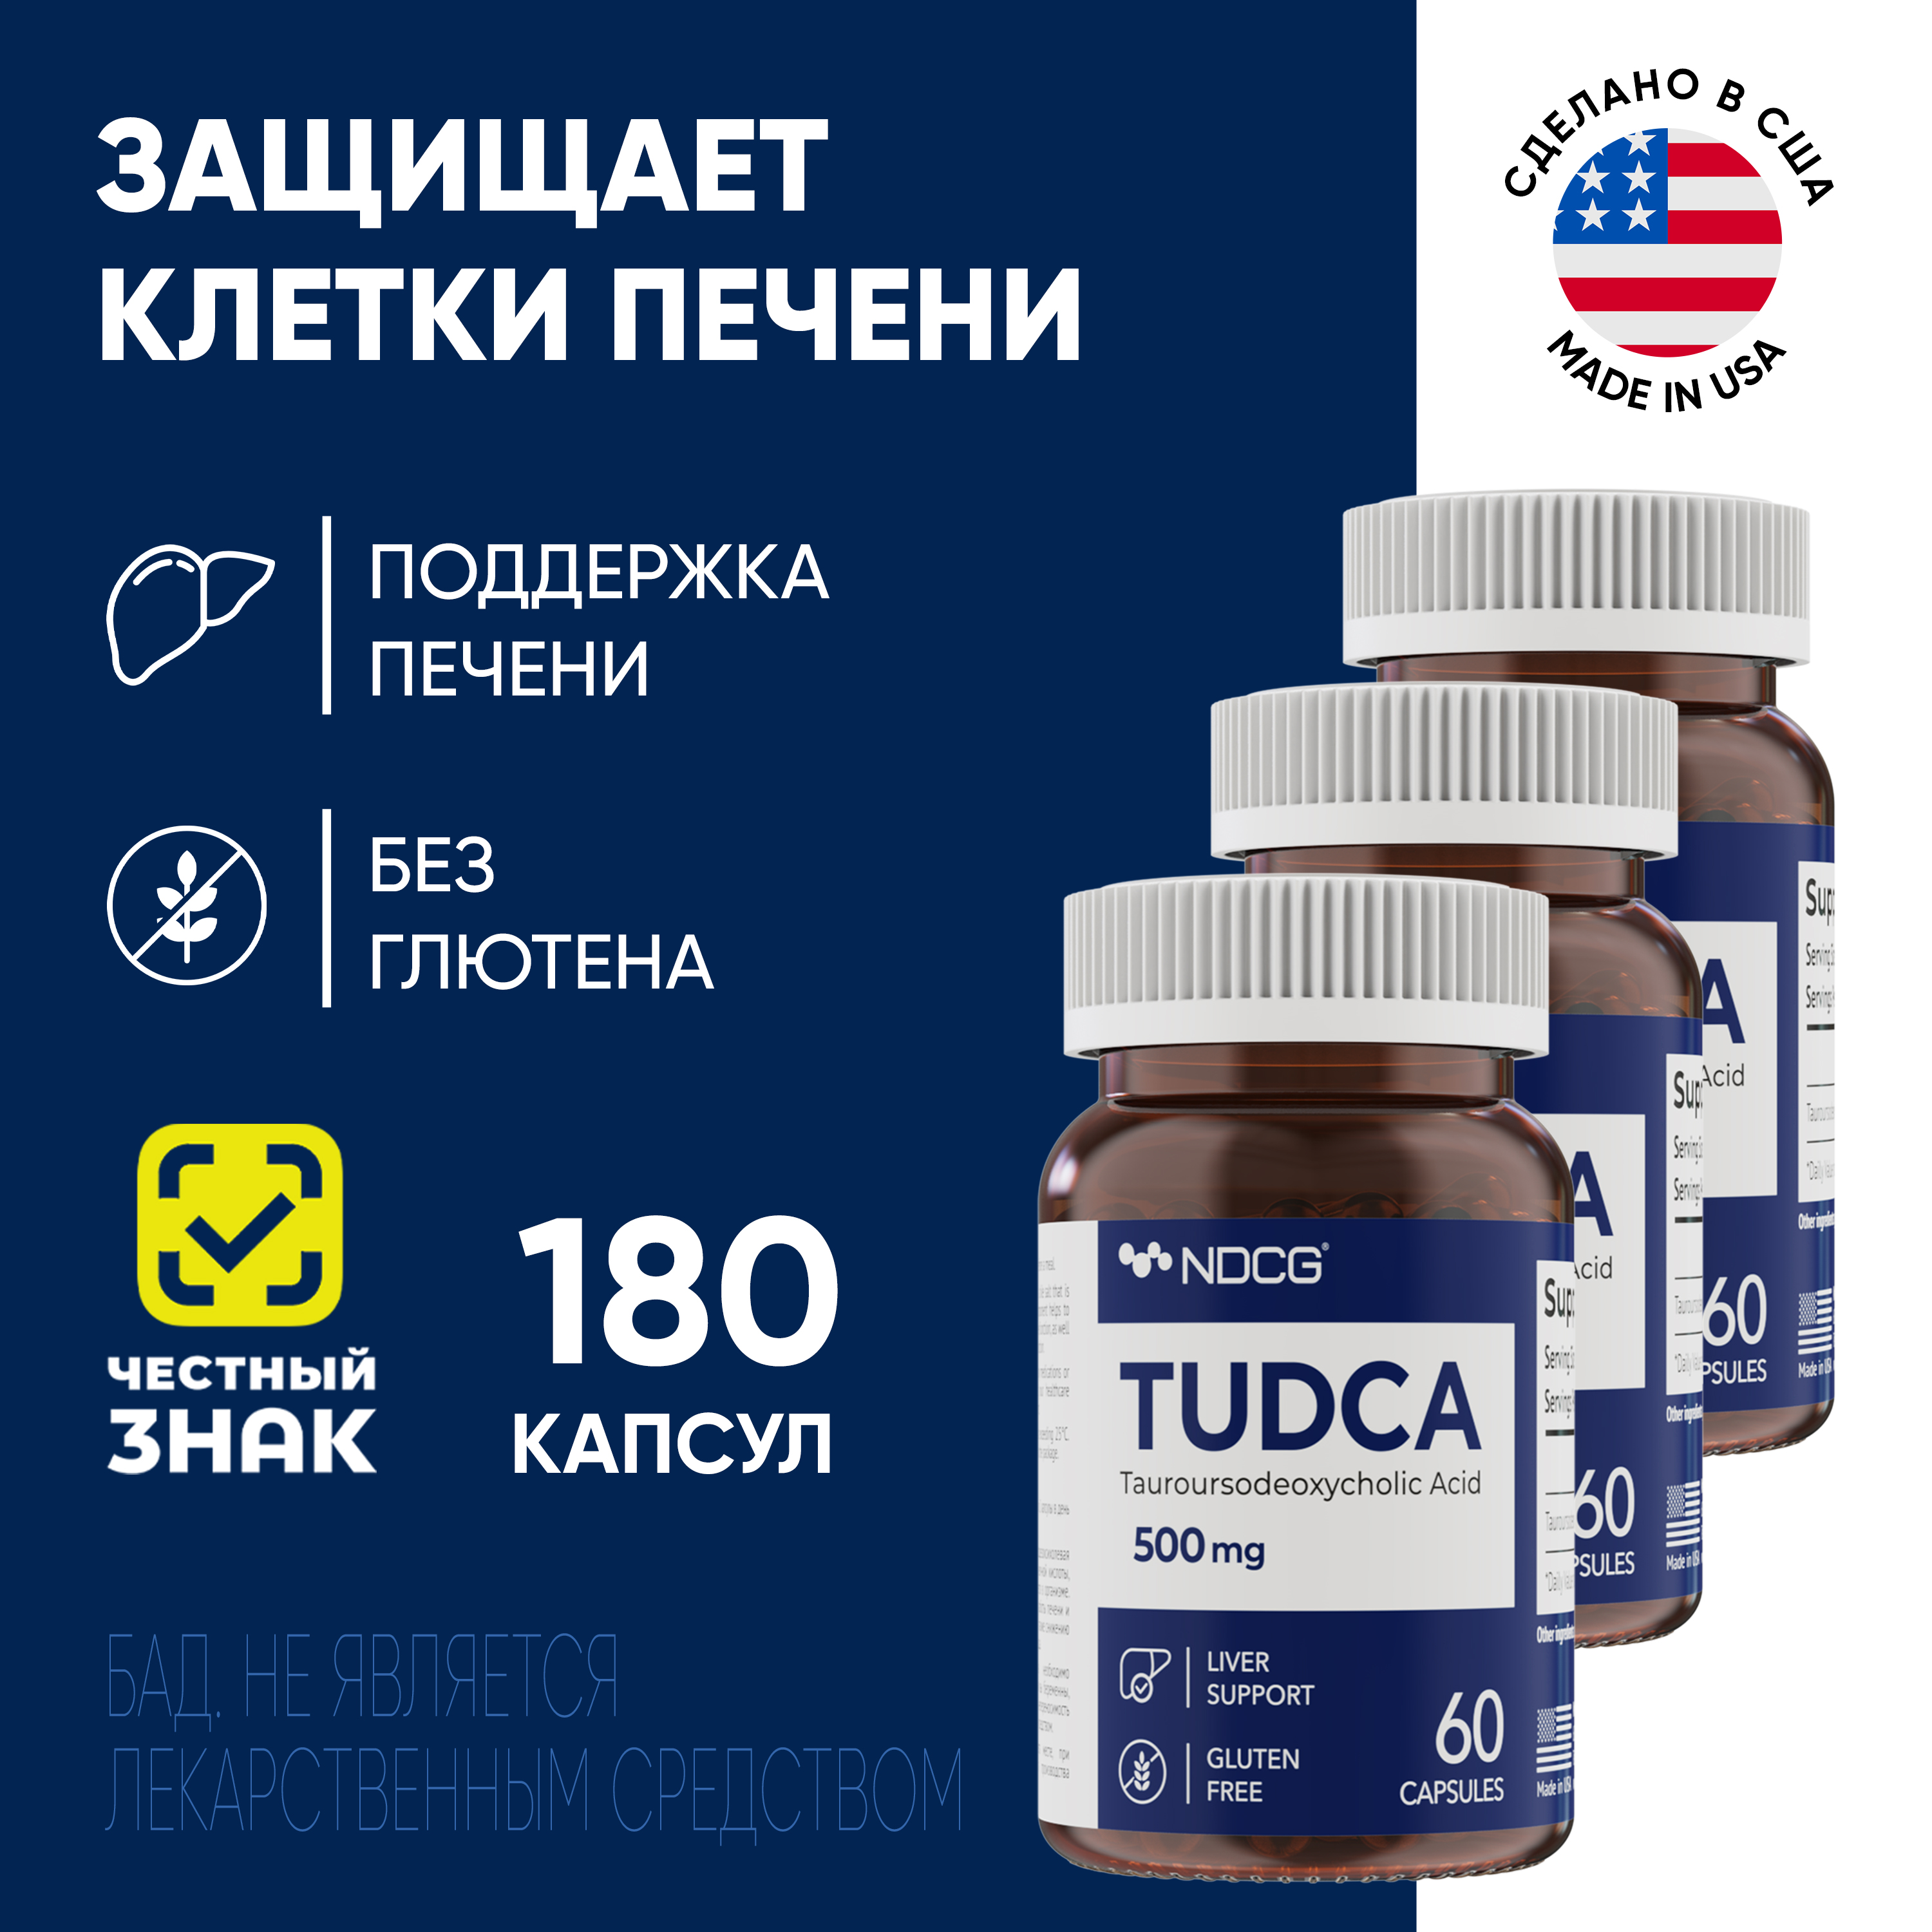 Комплект Тудка NDCG TUDCA 500 мг 60 капсул, 3 упаковки